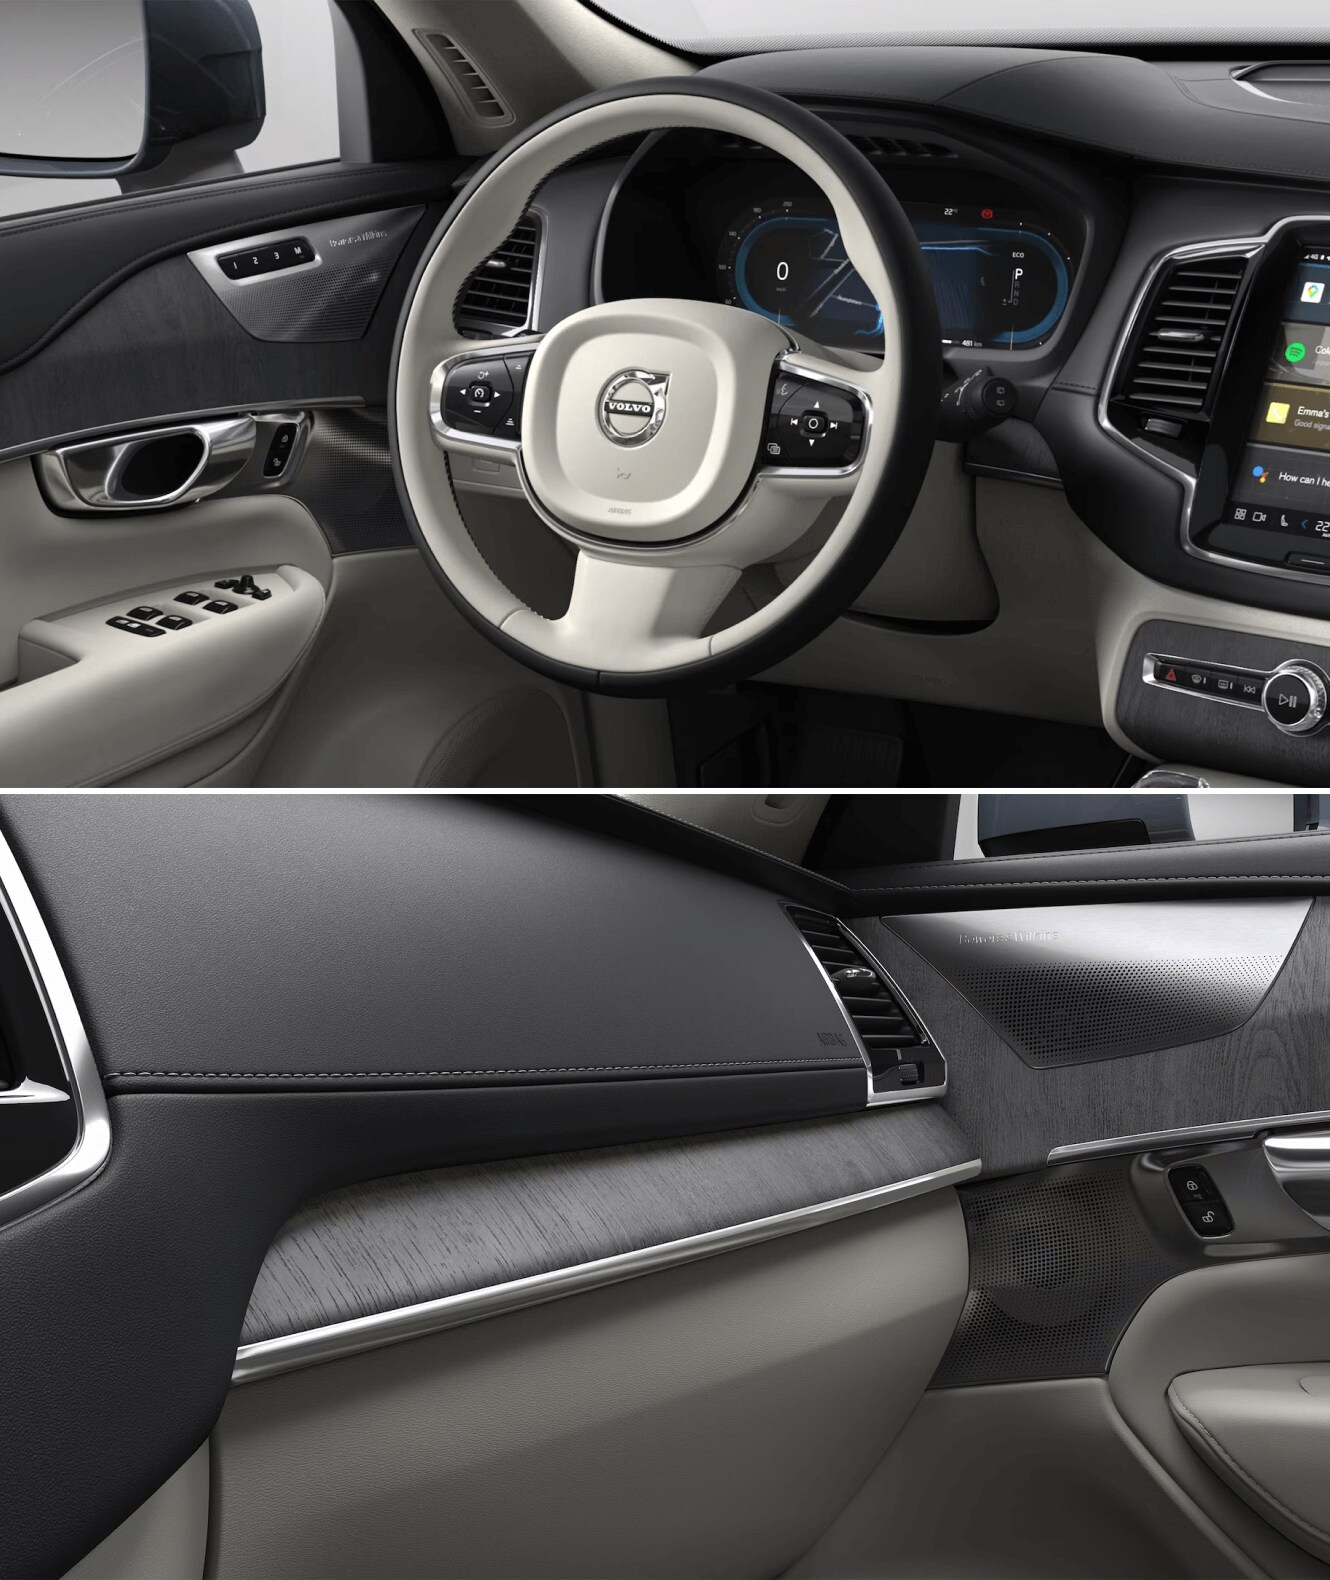 Audi Q7 vs. Volvo XC90 Interior Style and Benefits